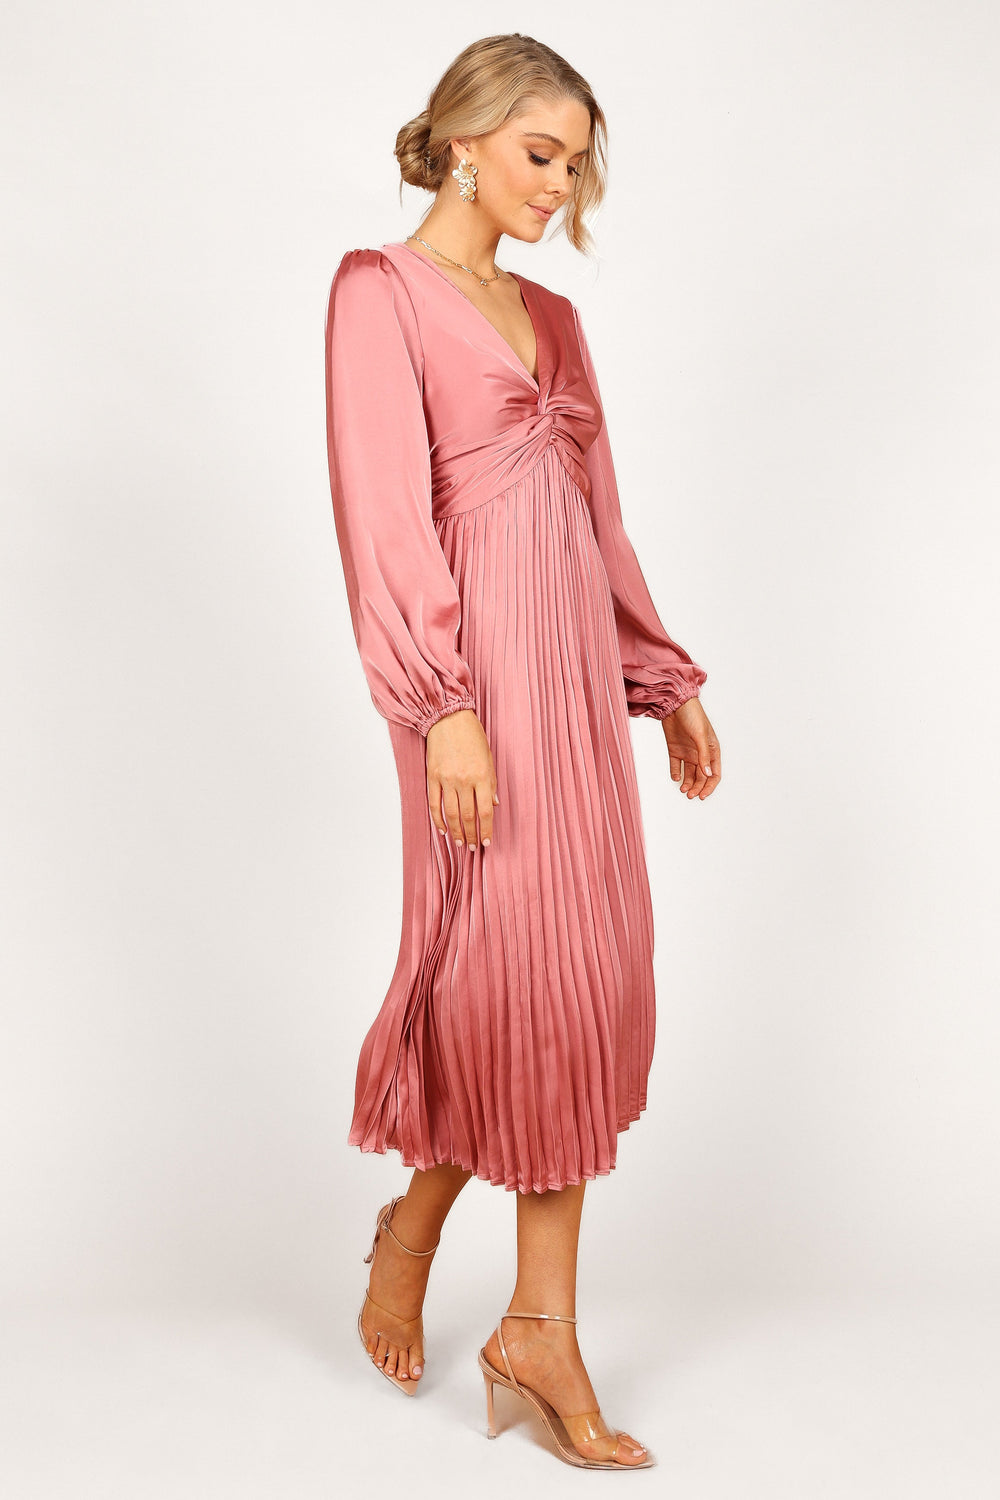 DRESSES Noelle Twist Front Pleated Midi Dress - Blush